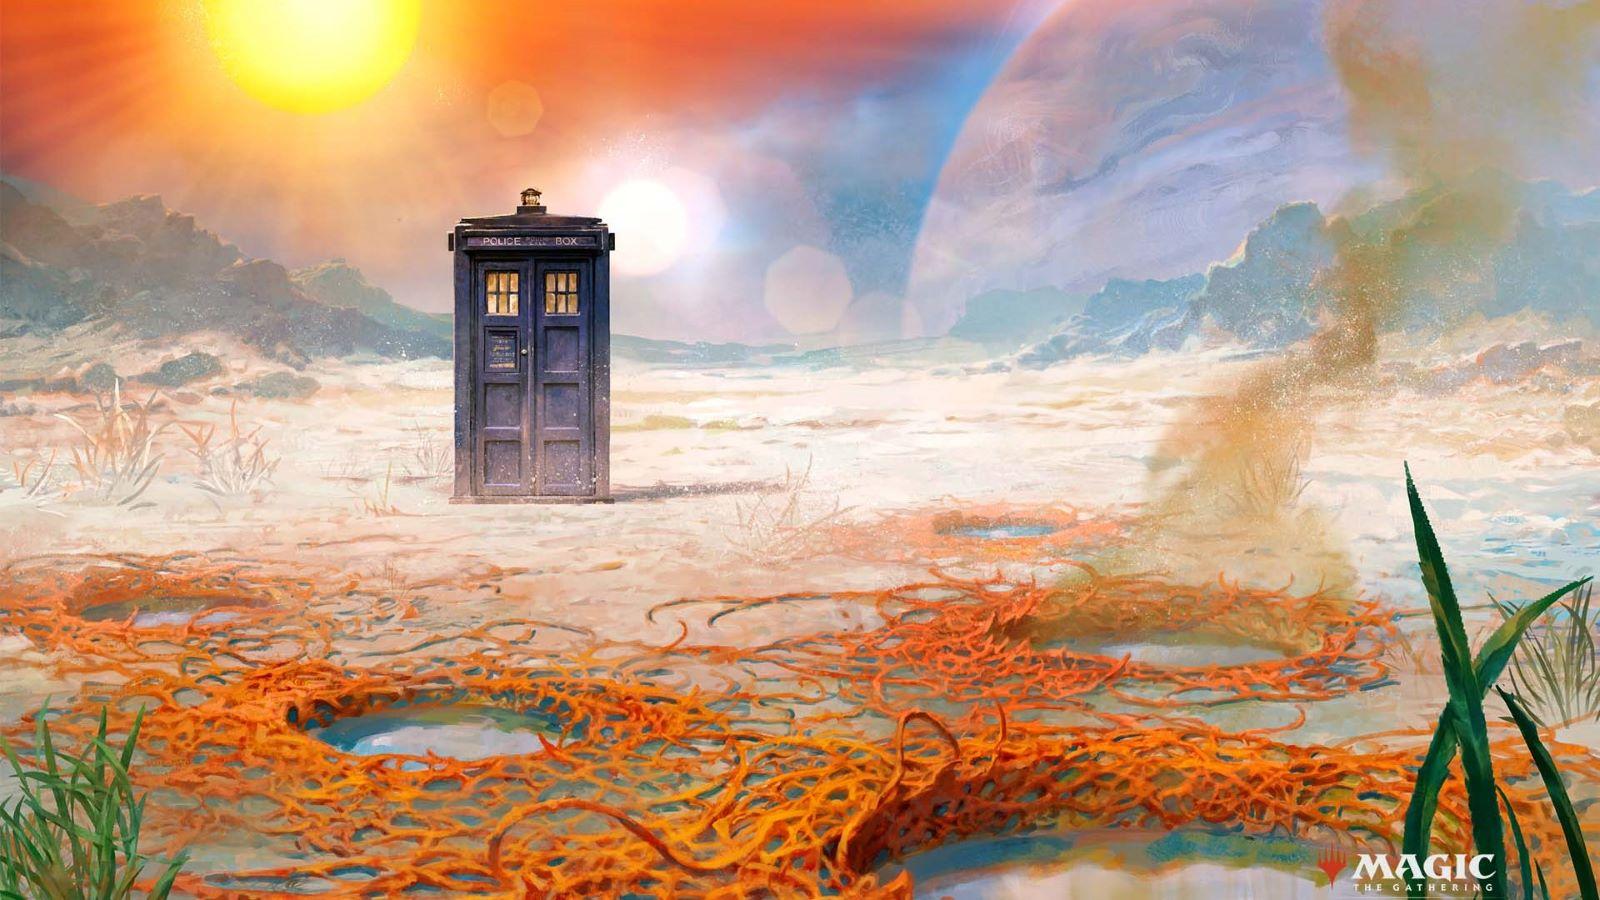 MTG Universes Beyond - Doctor Who Tardis on an alien planet